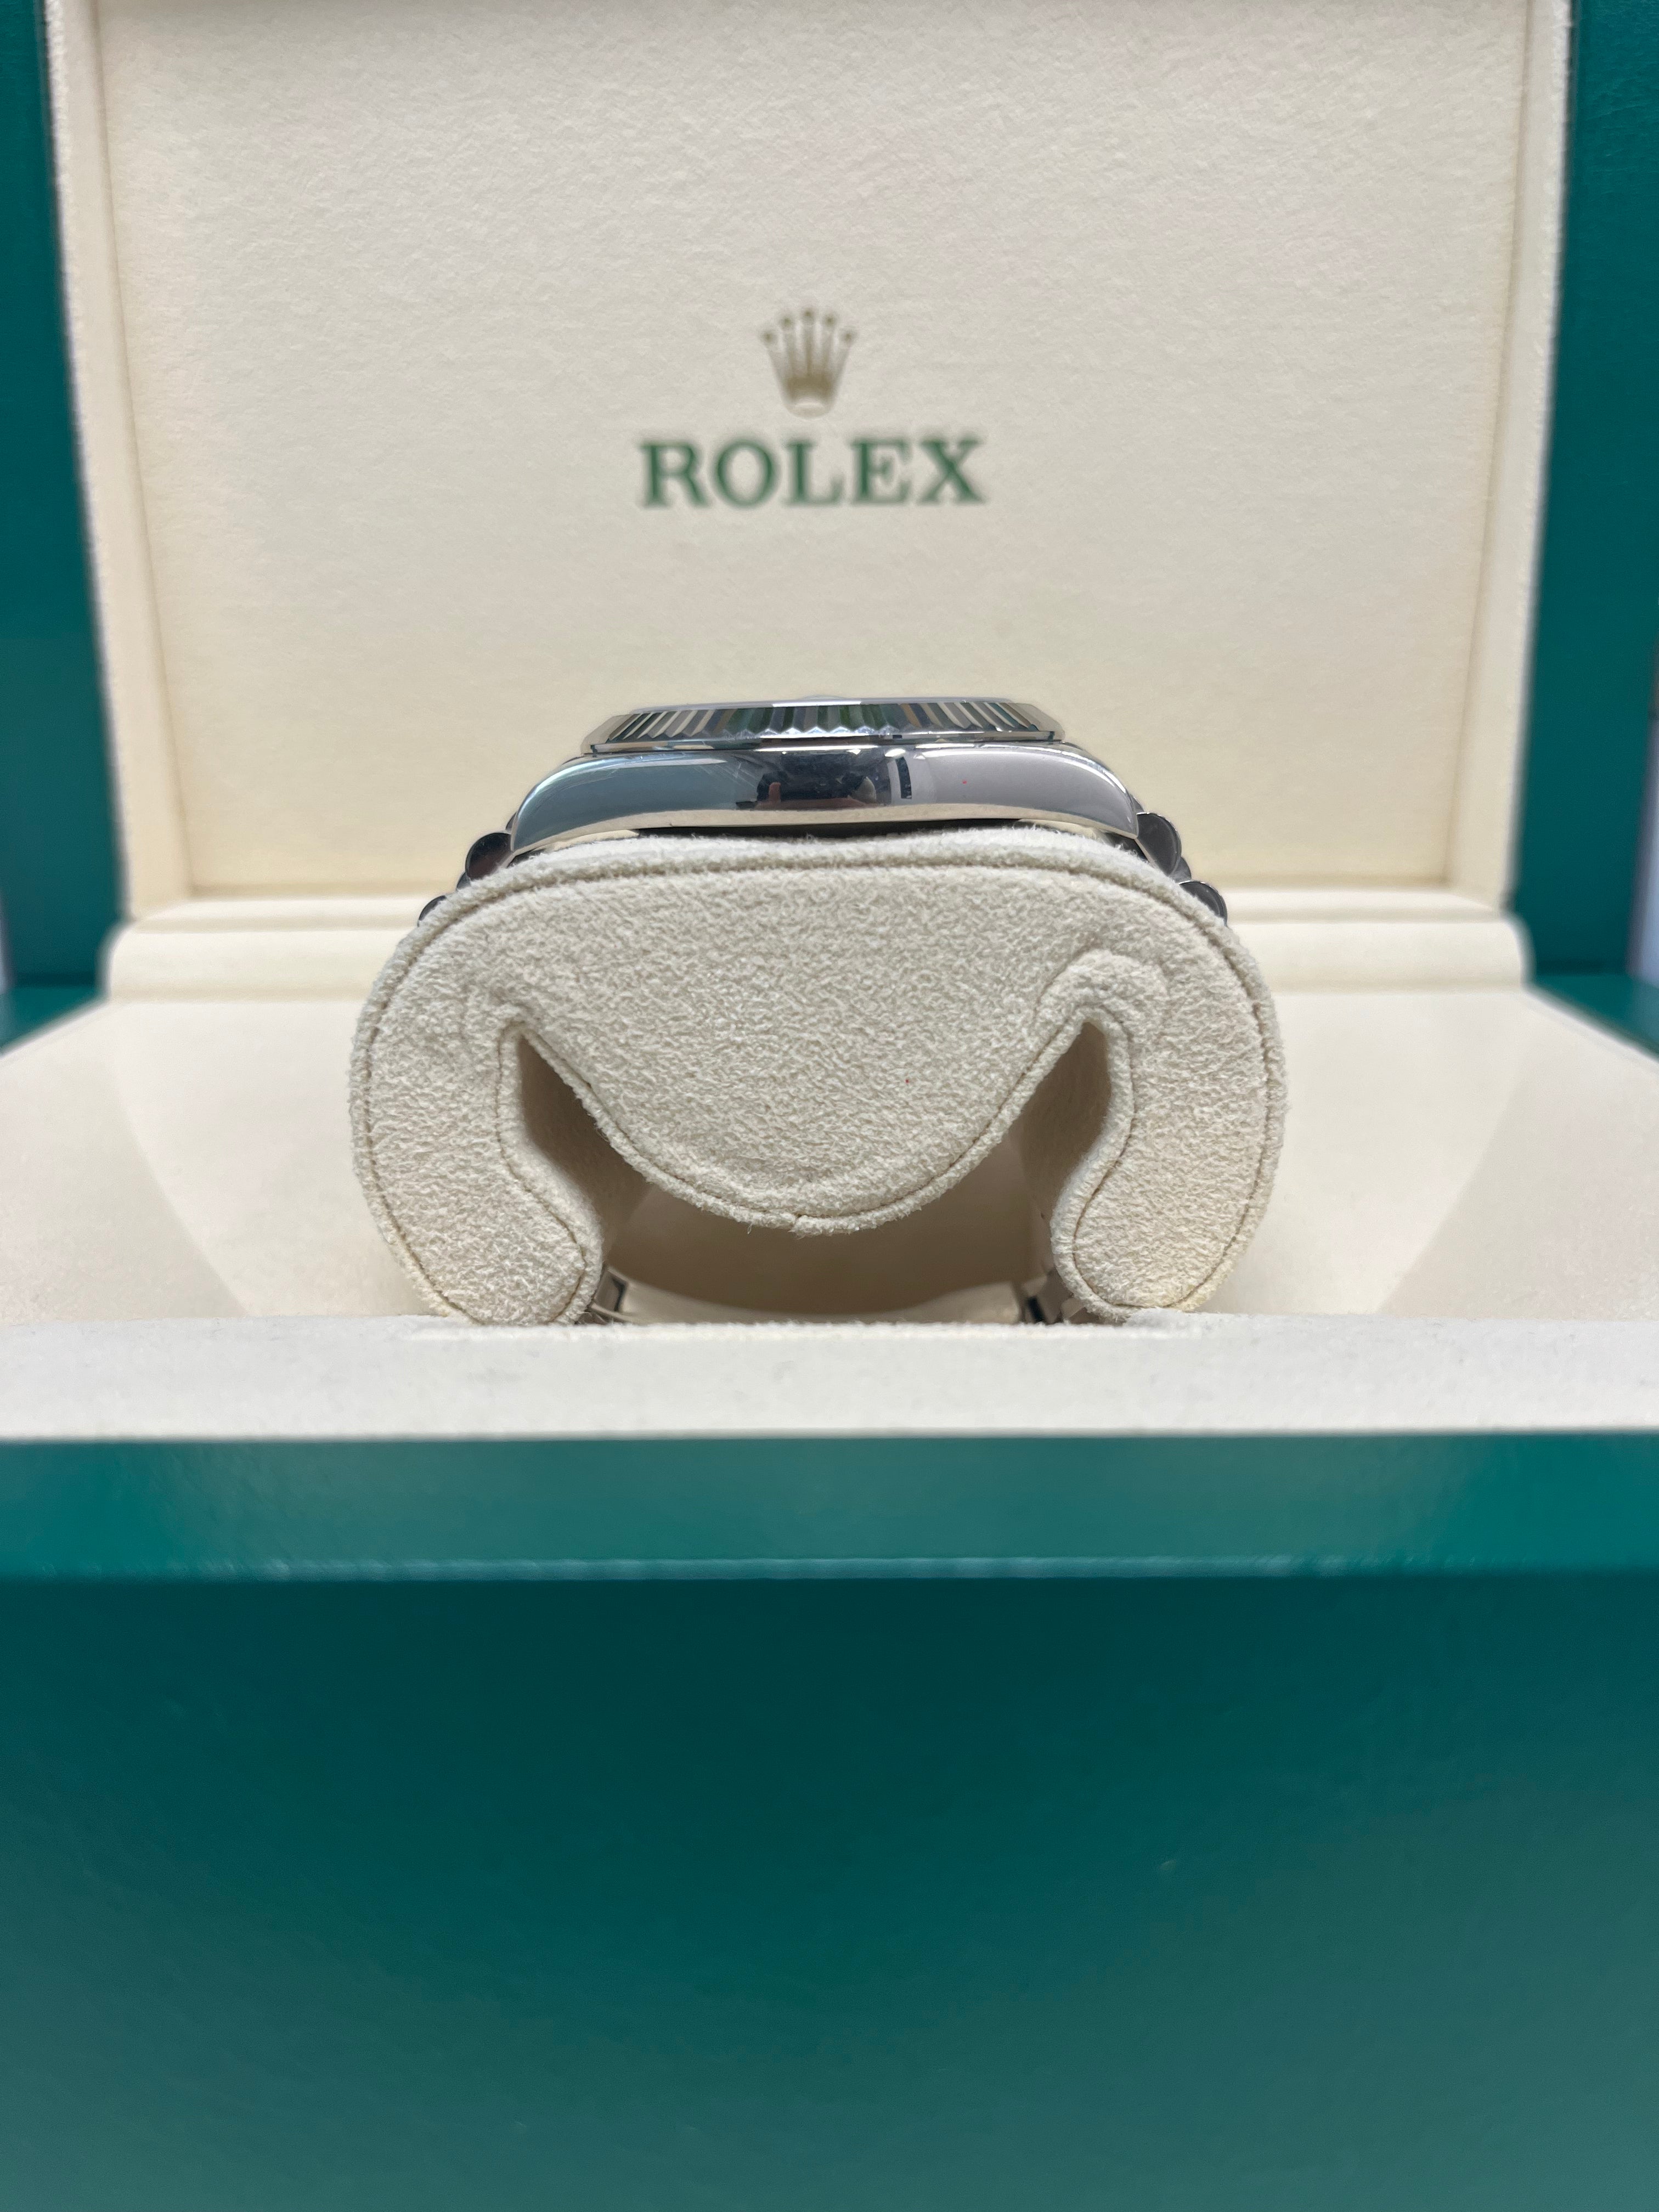 Rolex Day-Date II 18kt White Gold Rolex President Blue Wave Dial Watch (Ref 218239BLWAP)